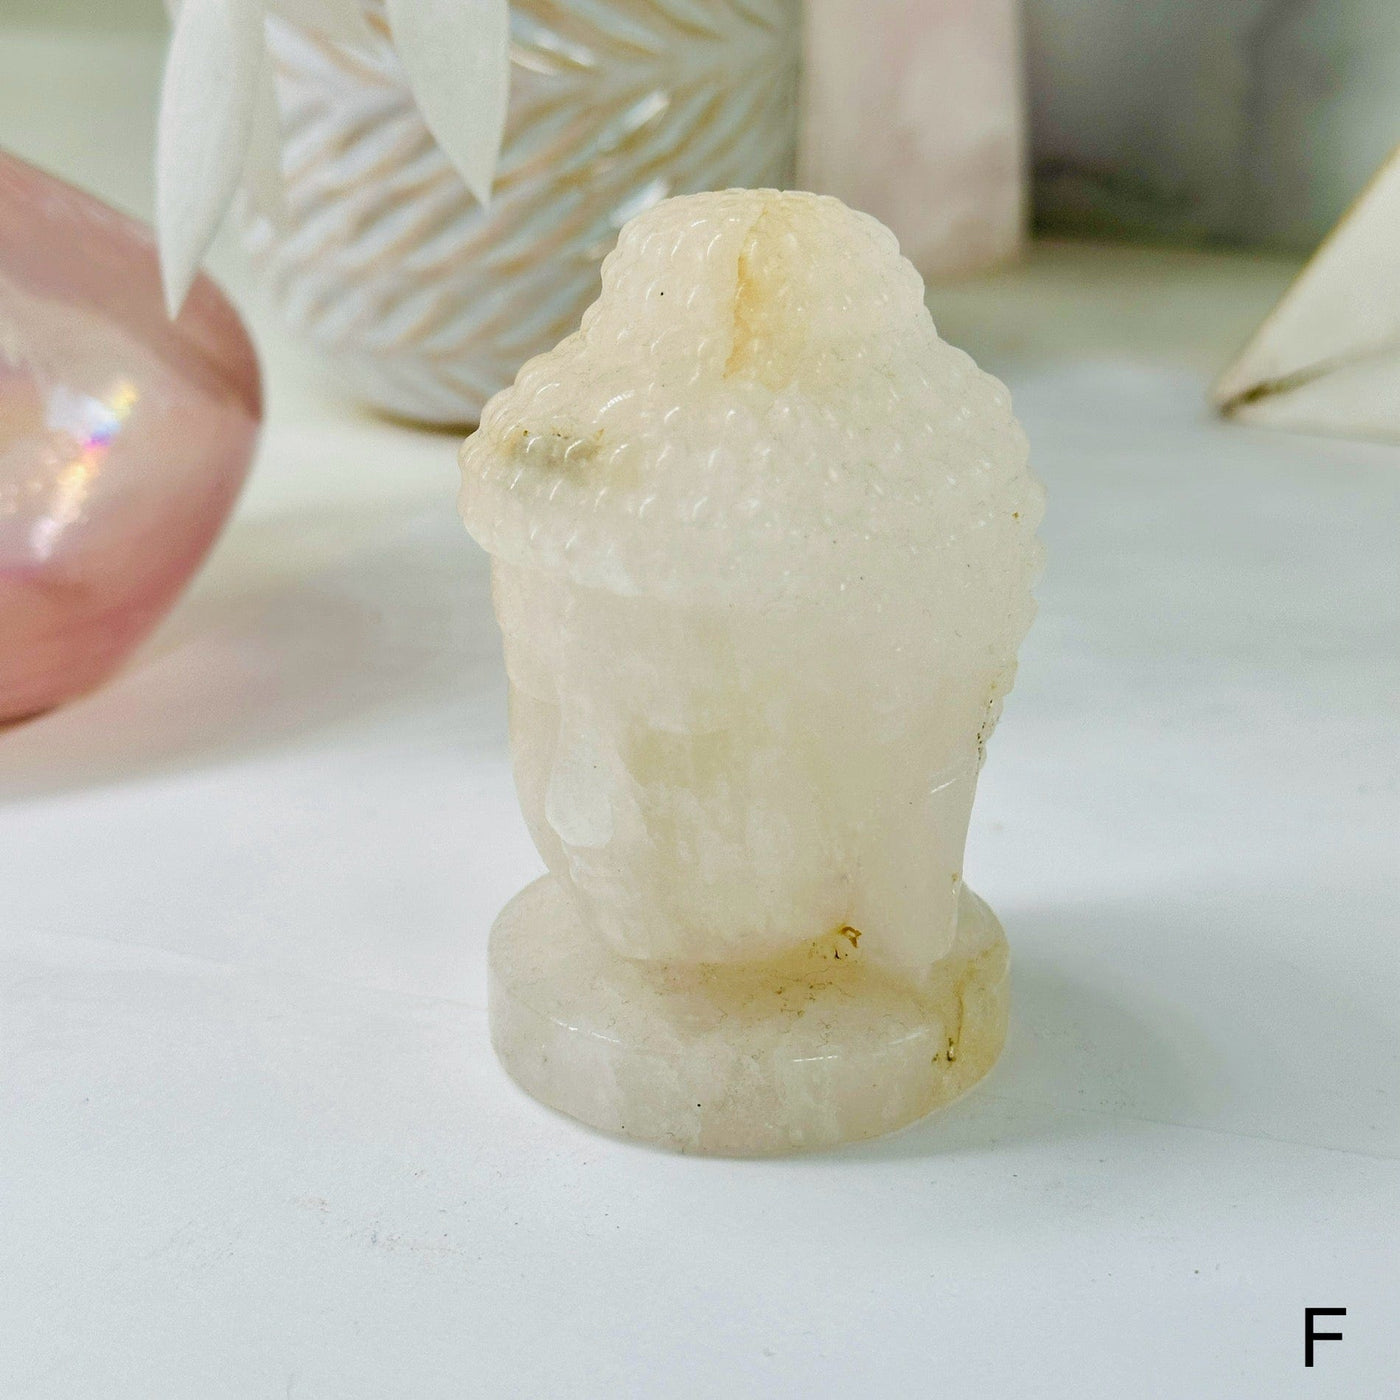 Crystal Quartz Carved Buddha Head - YOU CHOOSE variant F labeled